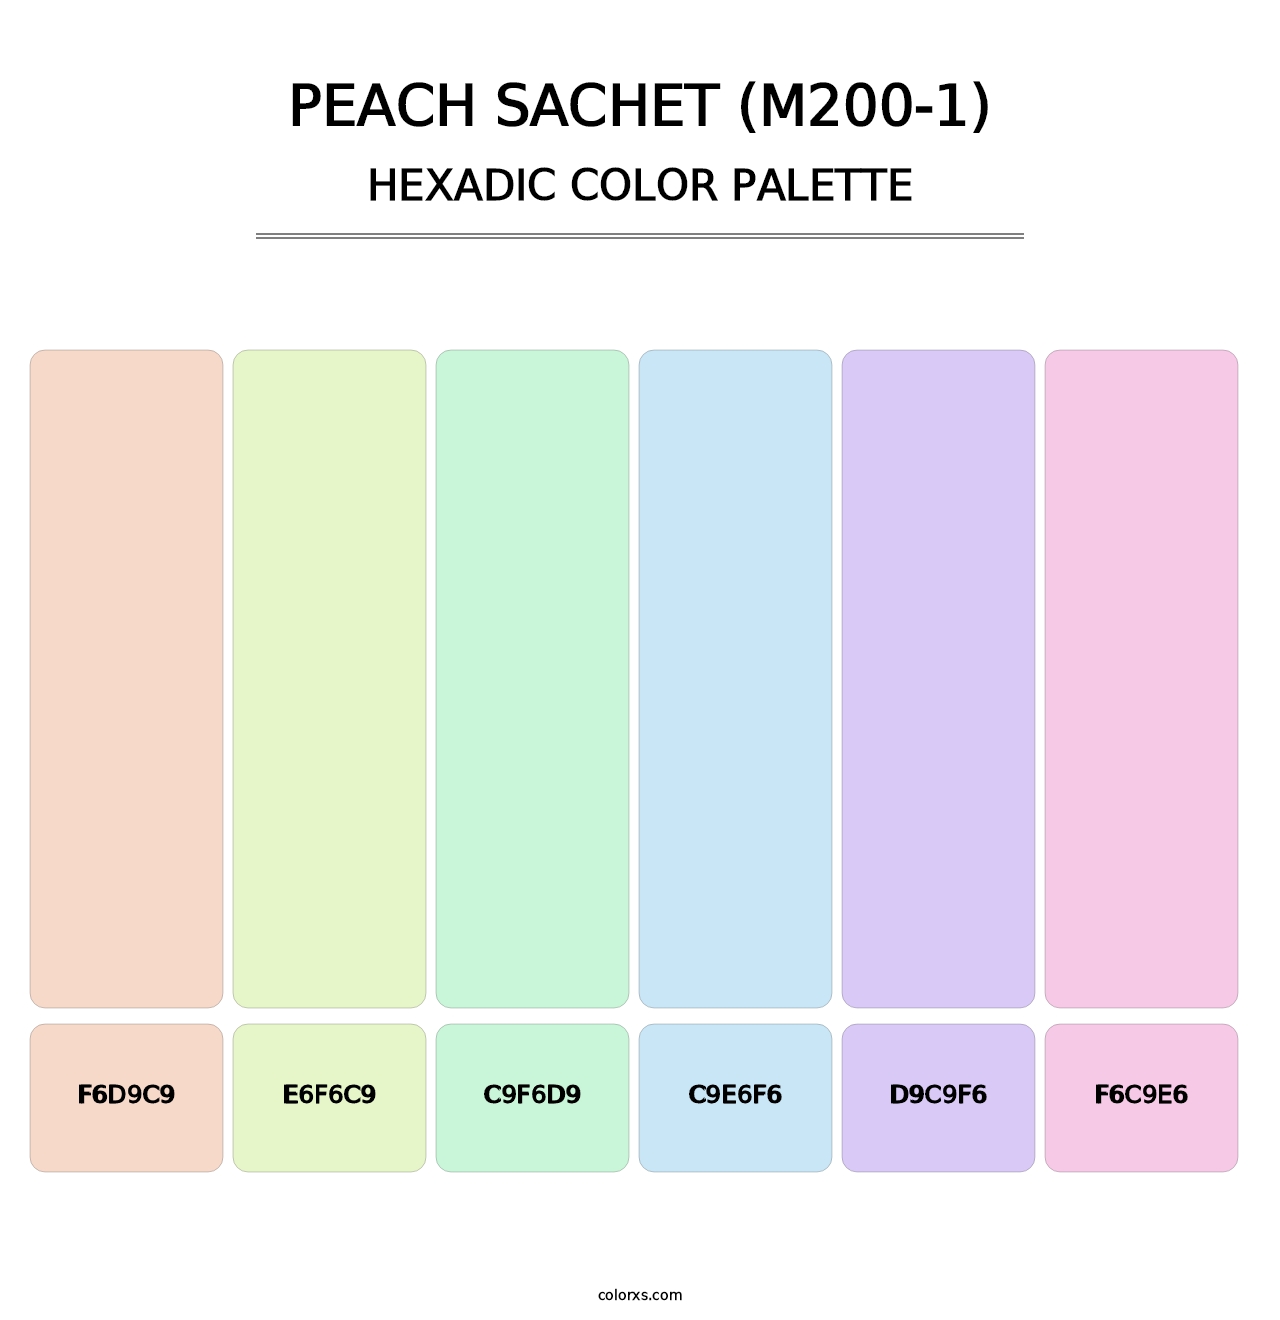 Peach Sachet (M200-1) - Hexadic Color Palette